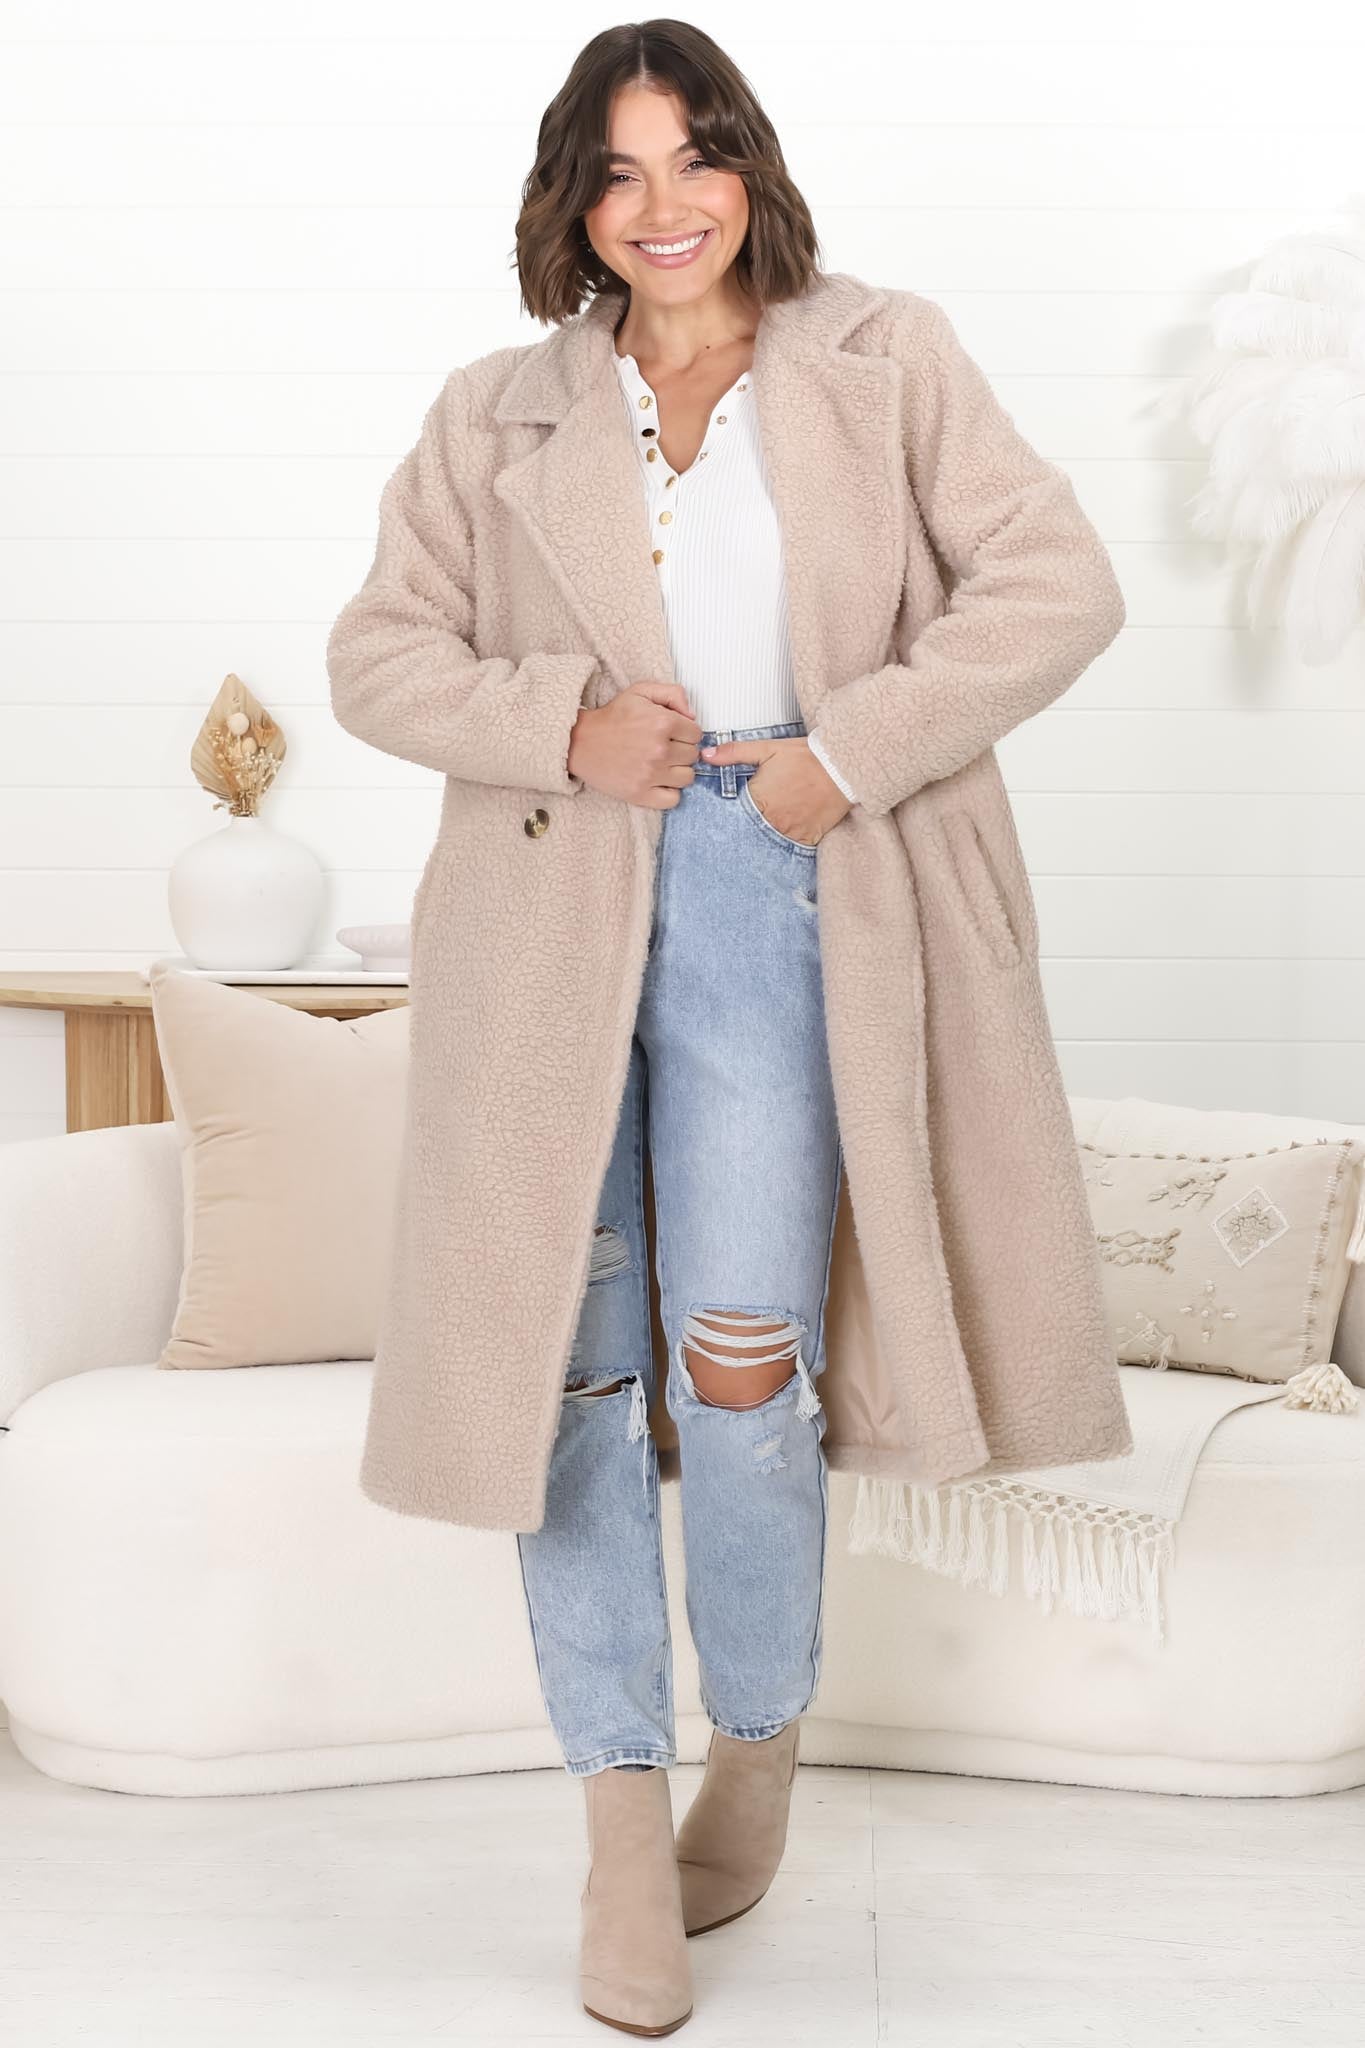 Get Outerwear: Rooney Coat in Beige | saltycrush.com – Salty Crush